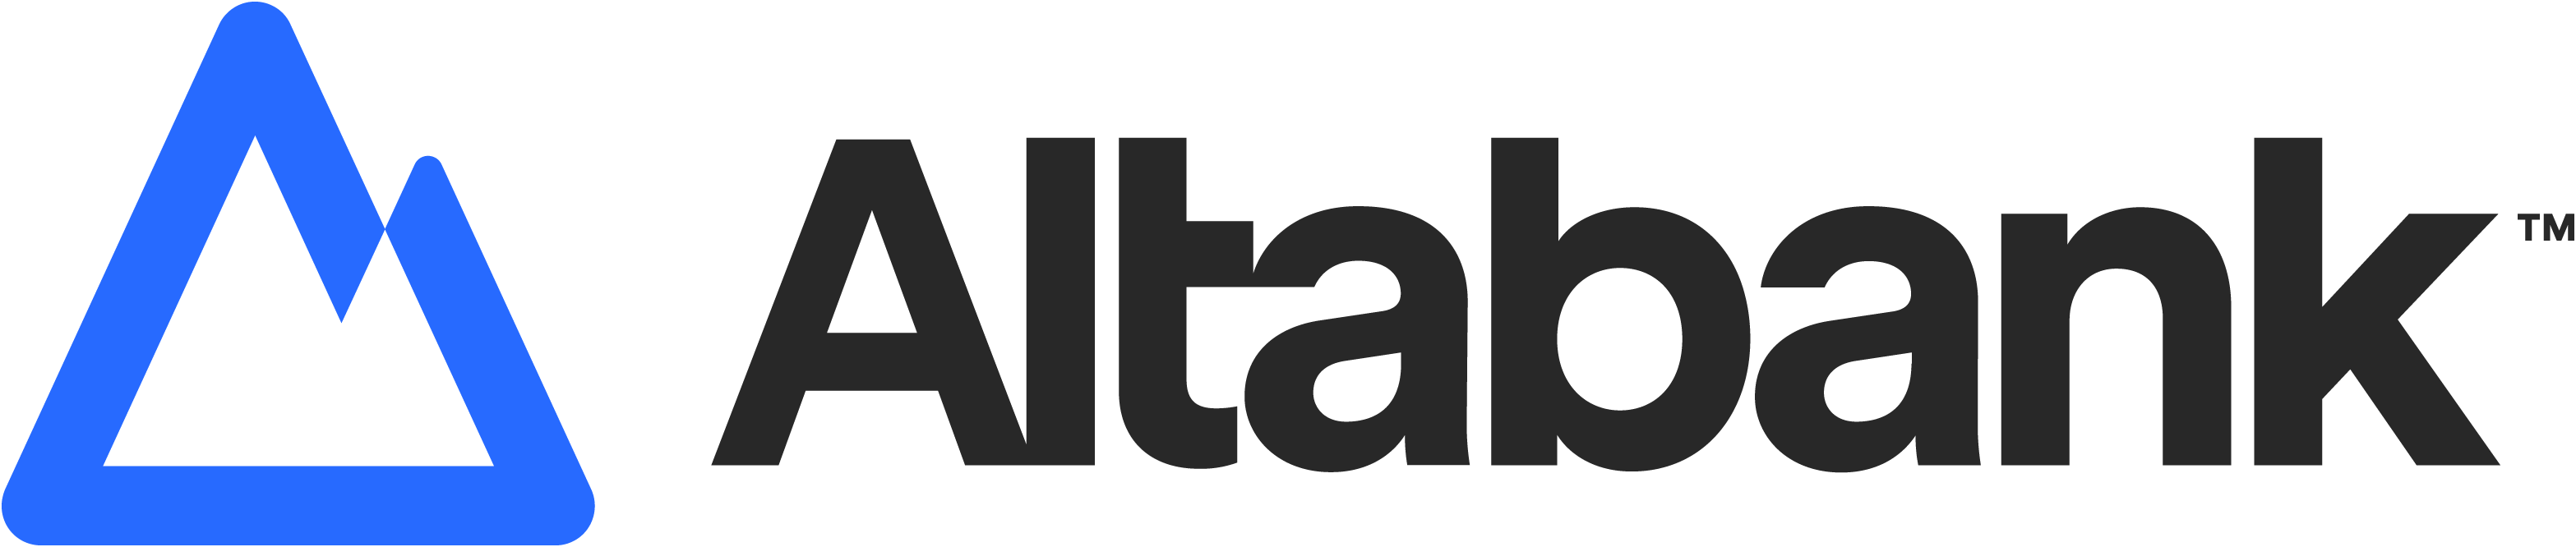 Altabank - Fraud Alert